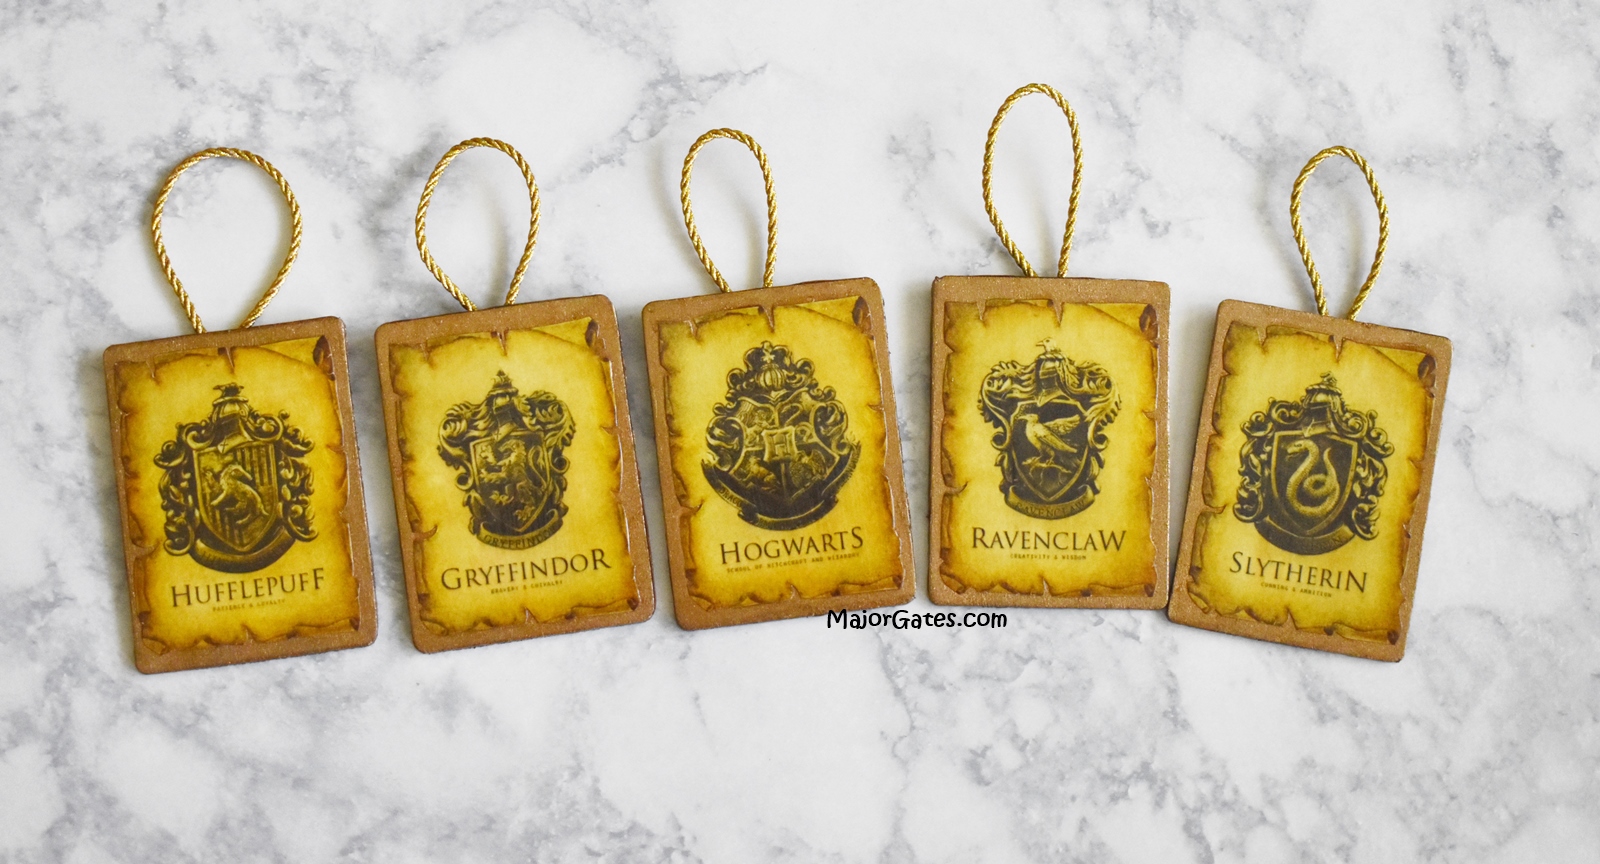 Harry Potter Crest Ornaments